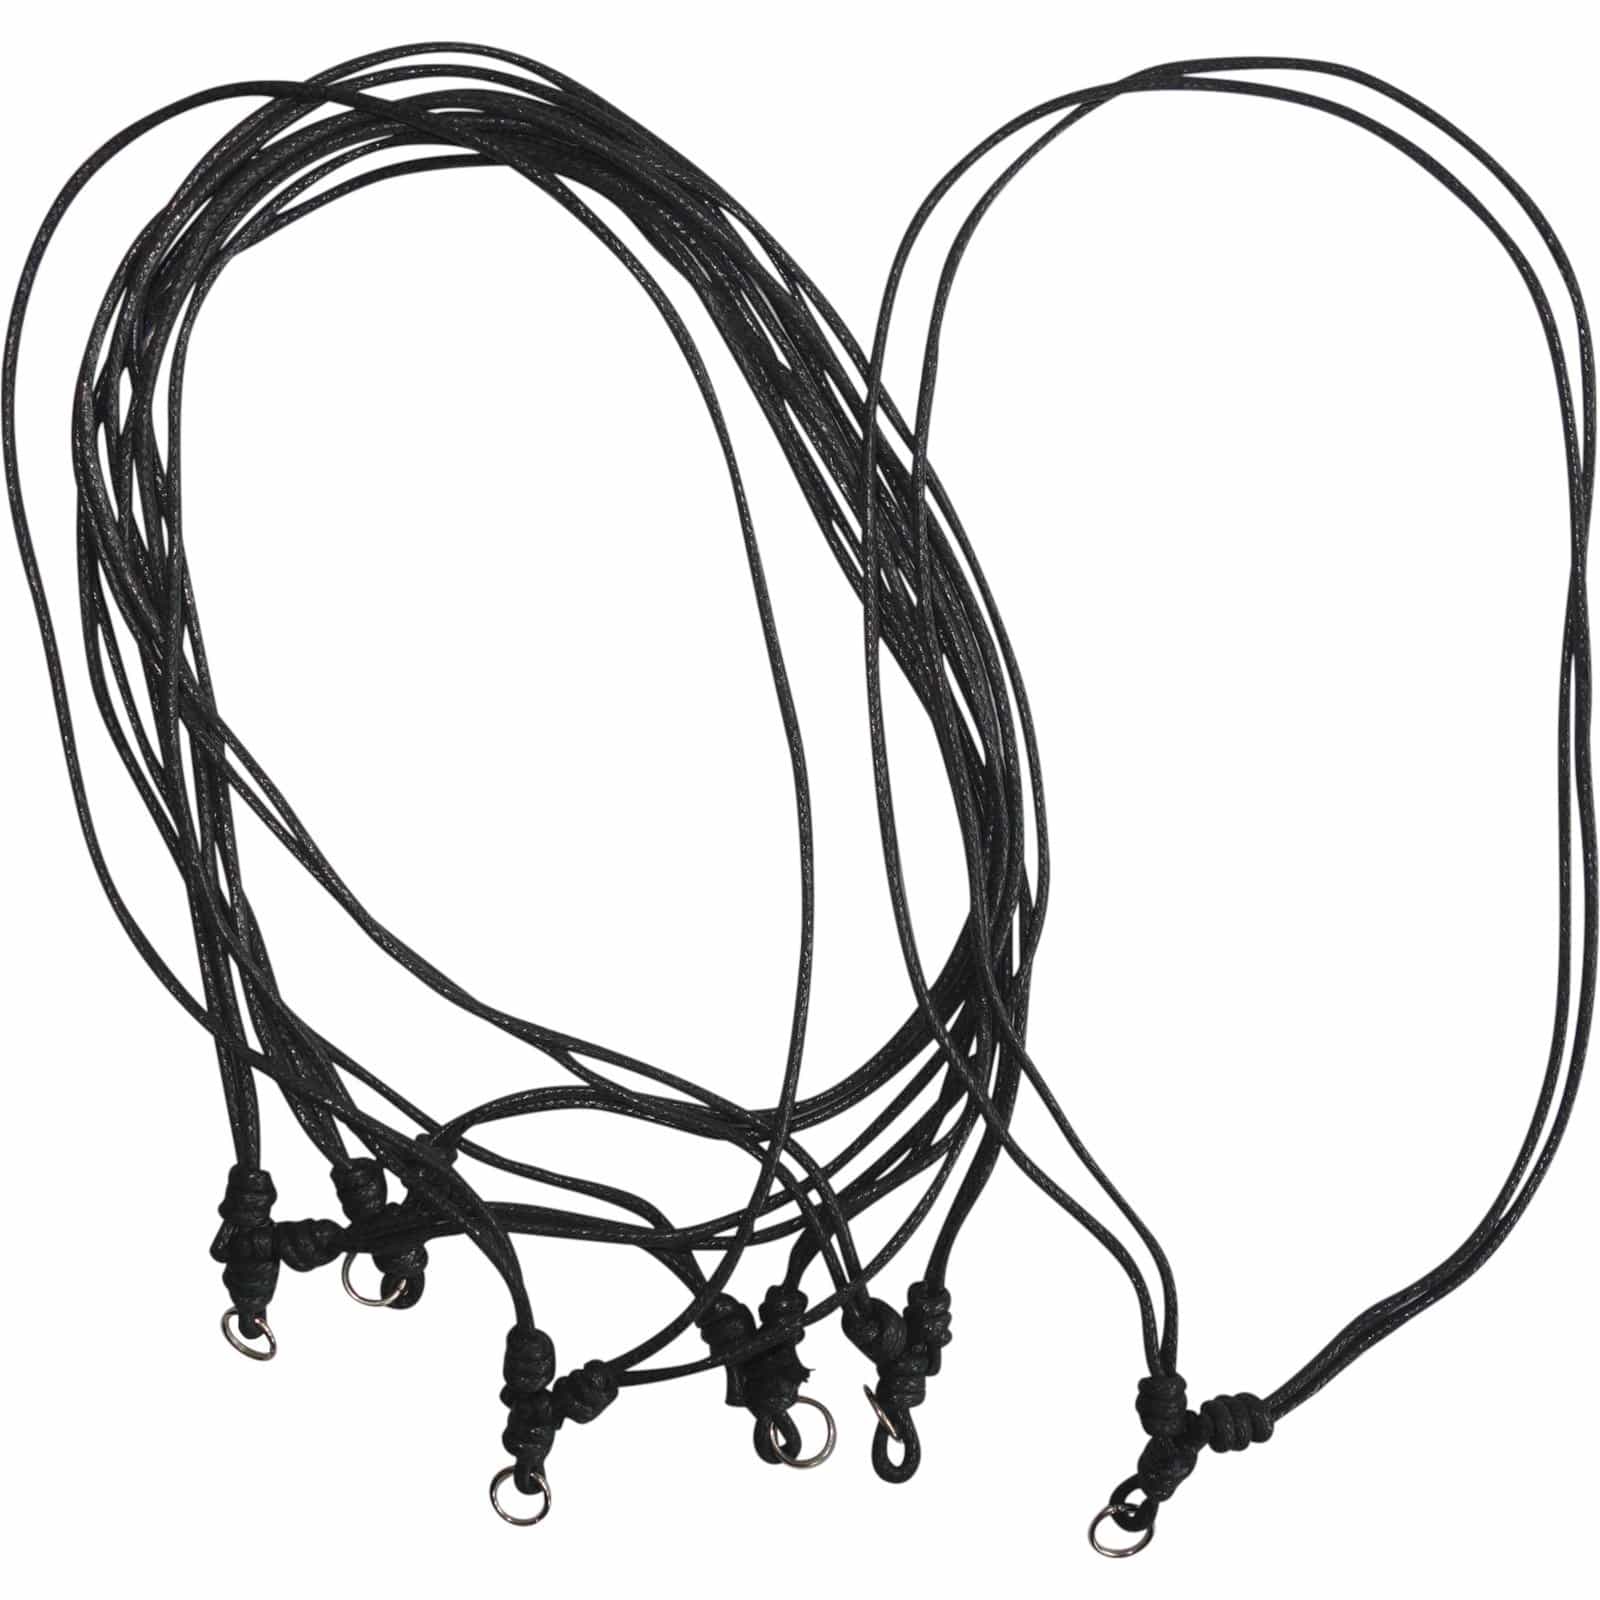 6 Black Hemp Cord Pendant Necklace Chains Chokers String Knot Ropes Bulk Wholesale